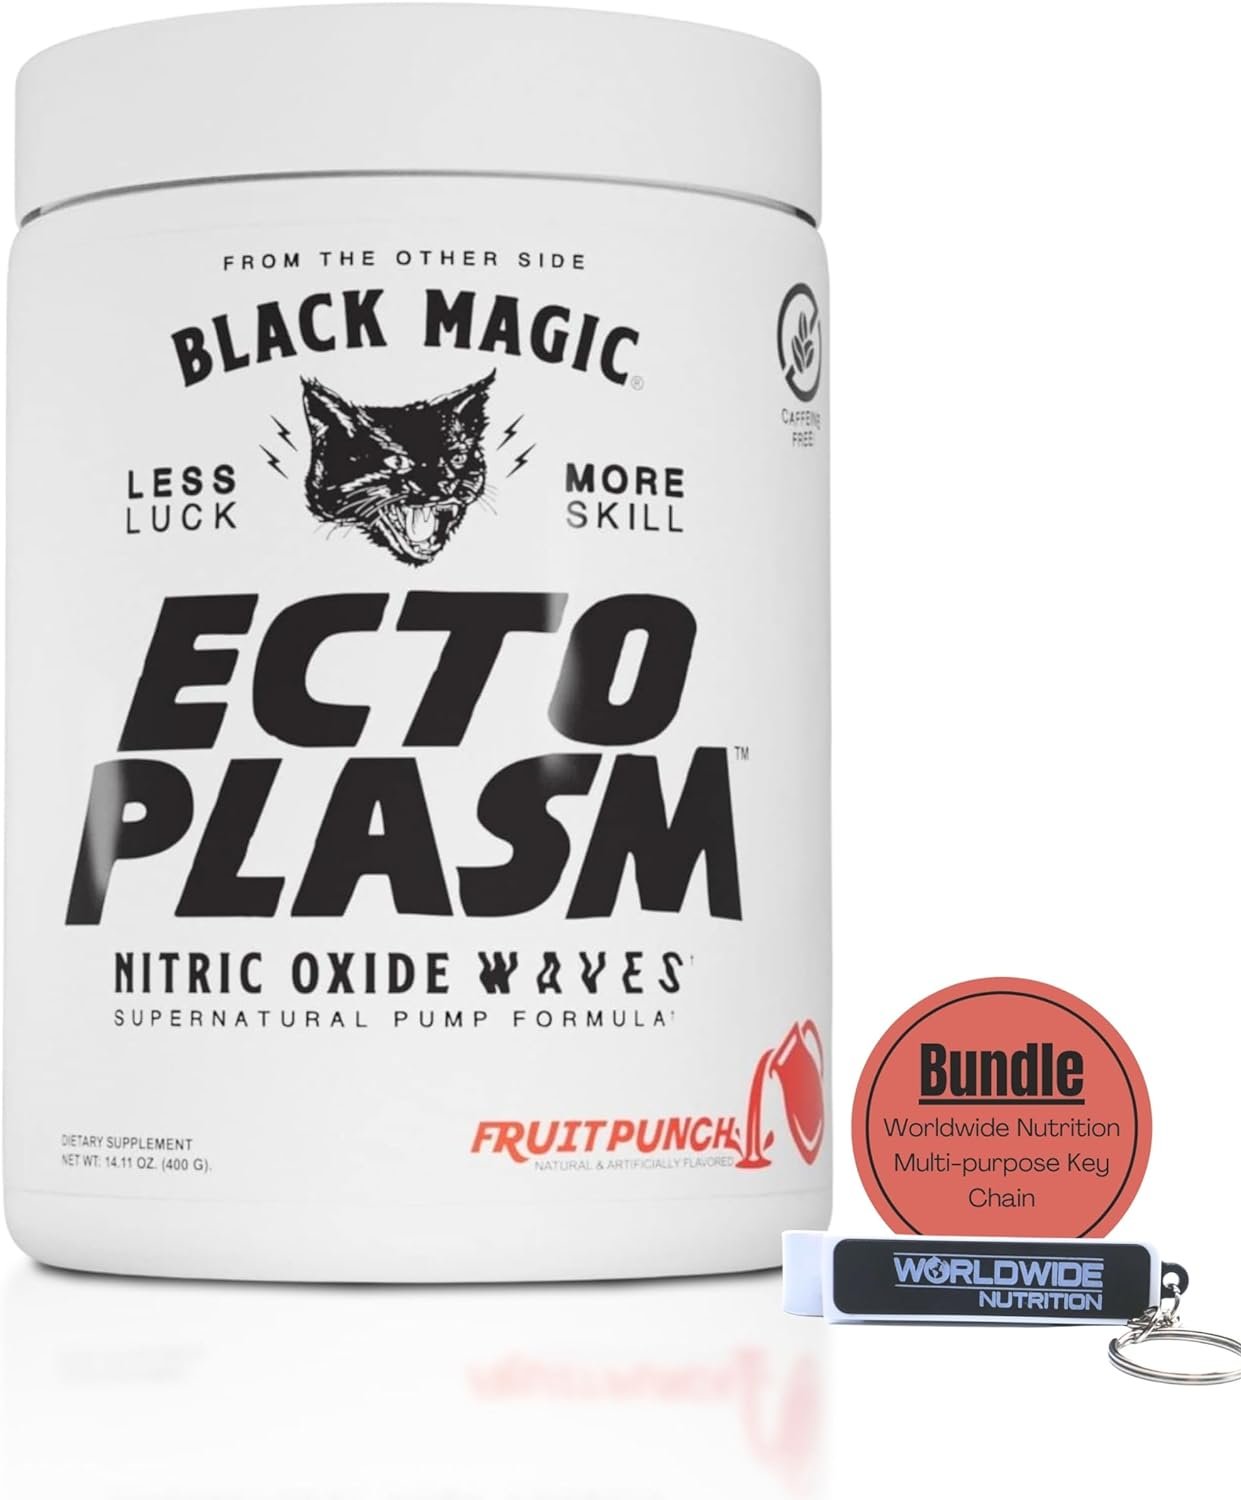 Black Magic Supply Ecto Plasm Nitric Oxide Waves -Supernatural Pump Formula - Non-Stim Pump Pre-Workout - 400g - with Multi-Purpose Key Chain